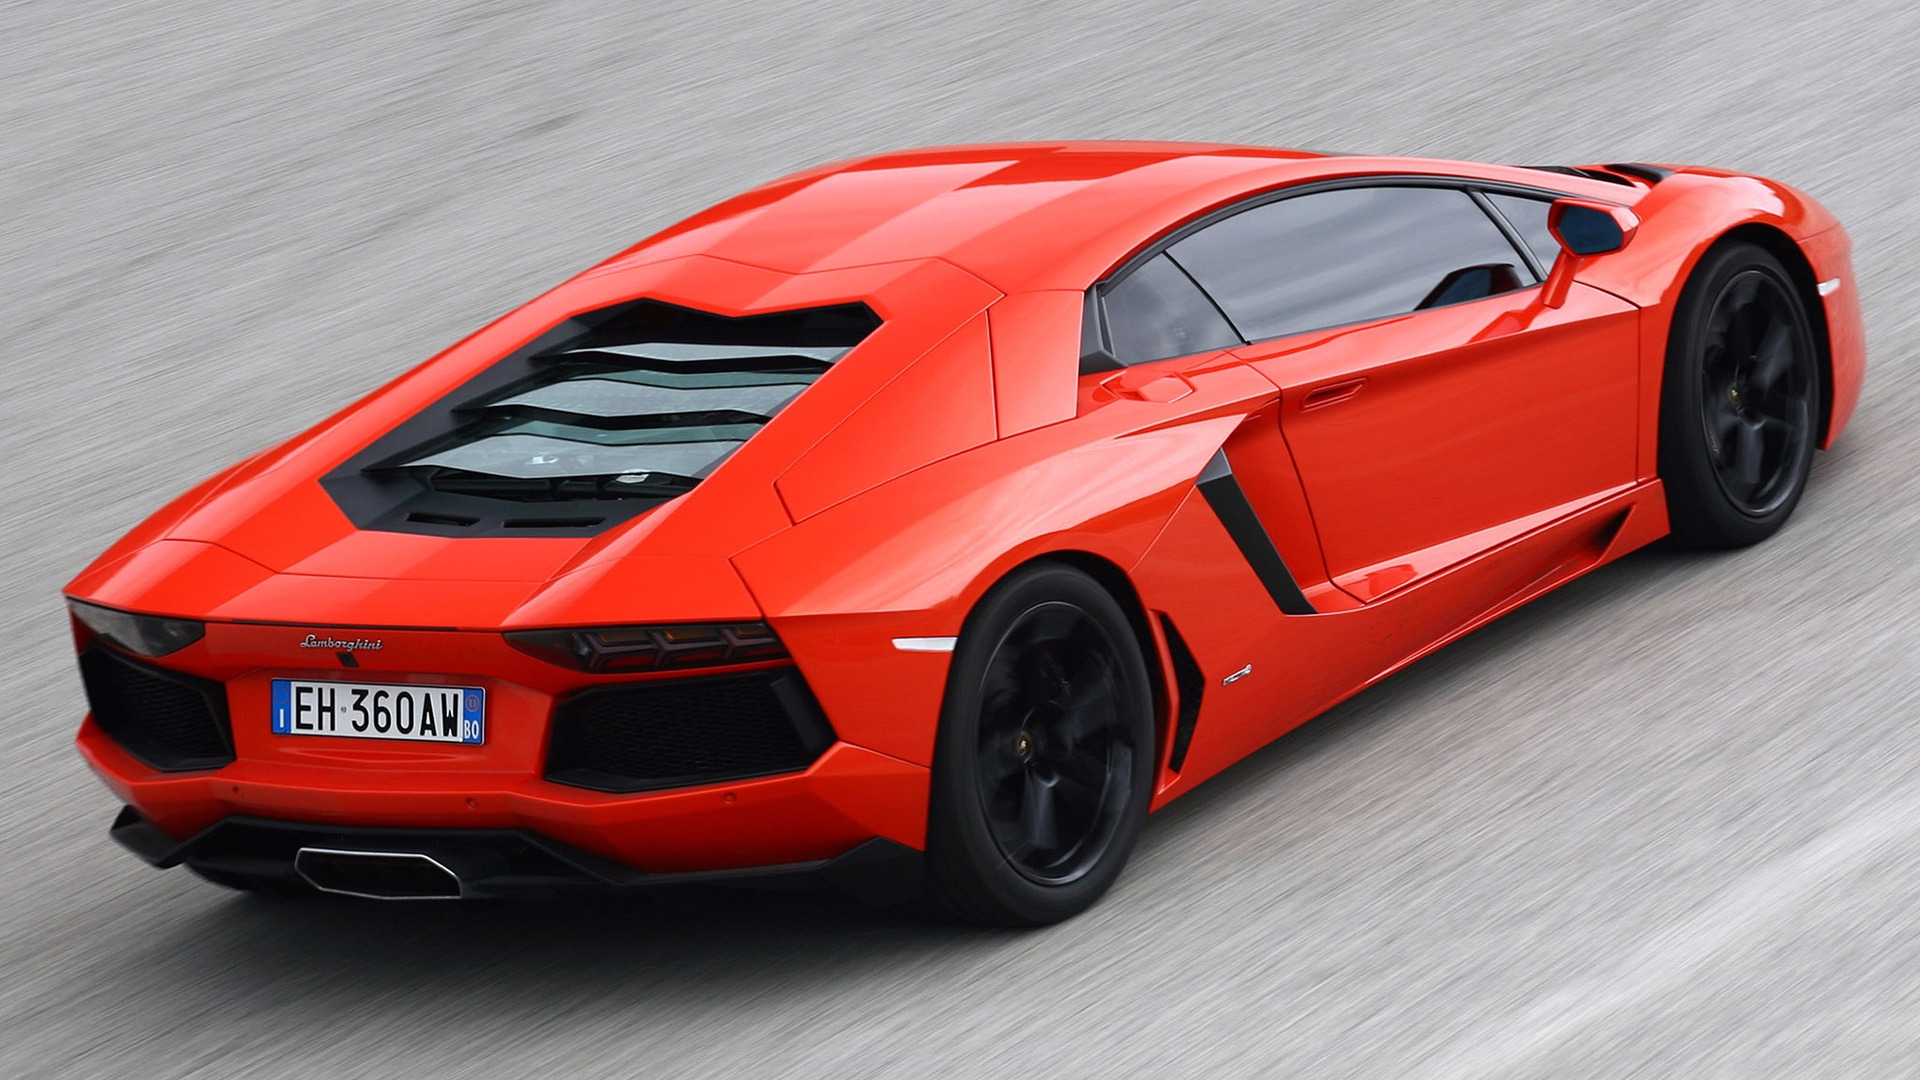 Lamborghini Aventador Top Rear for 1920 x 1080 HDTV 1080p resolution